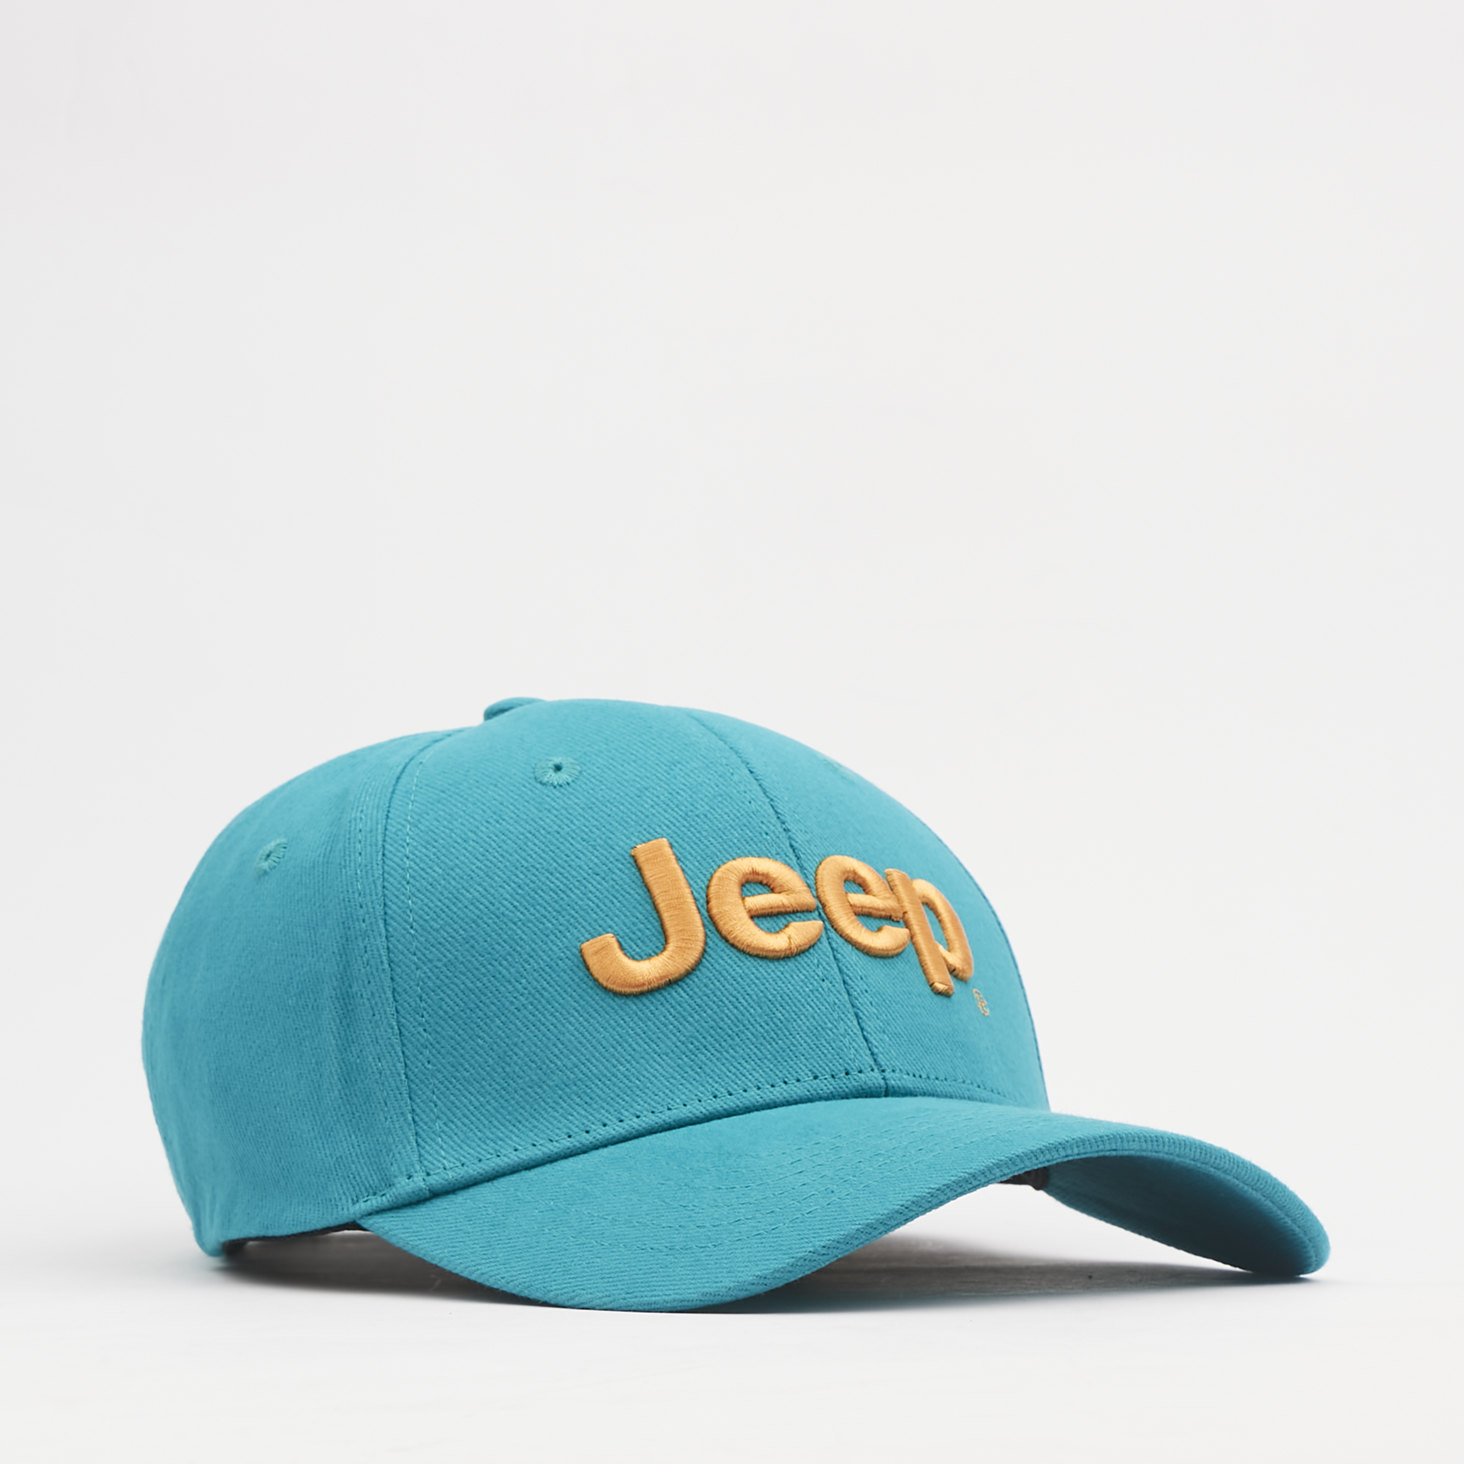 BASIC BRANDED CAP | Jeep